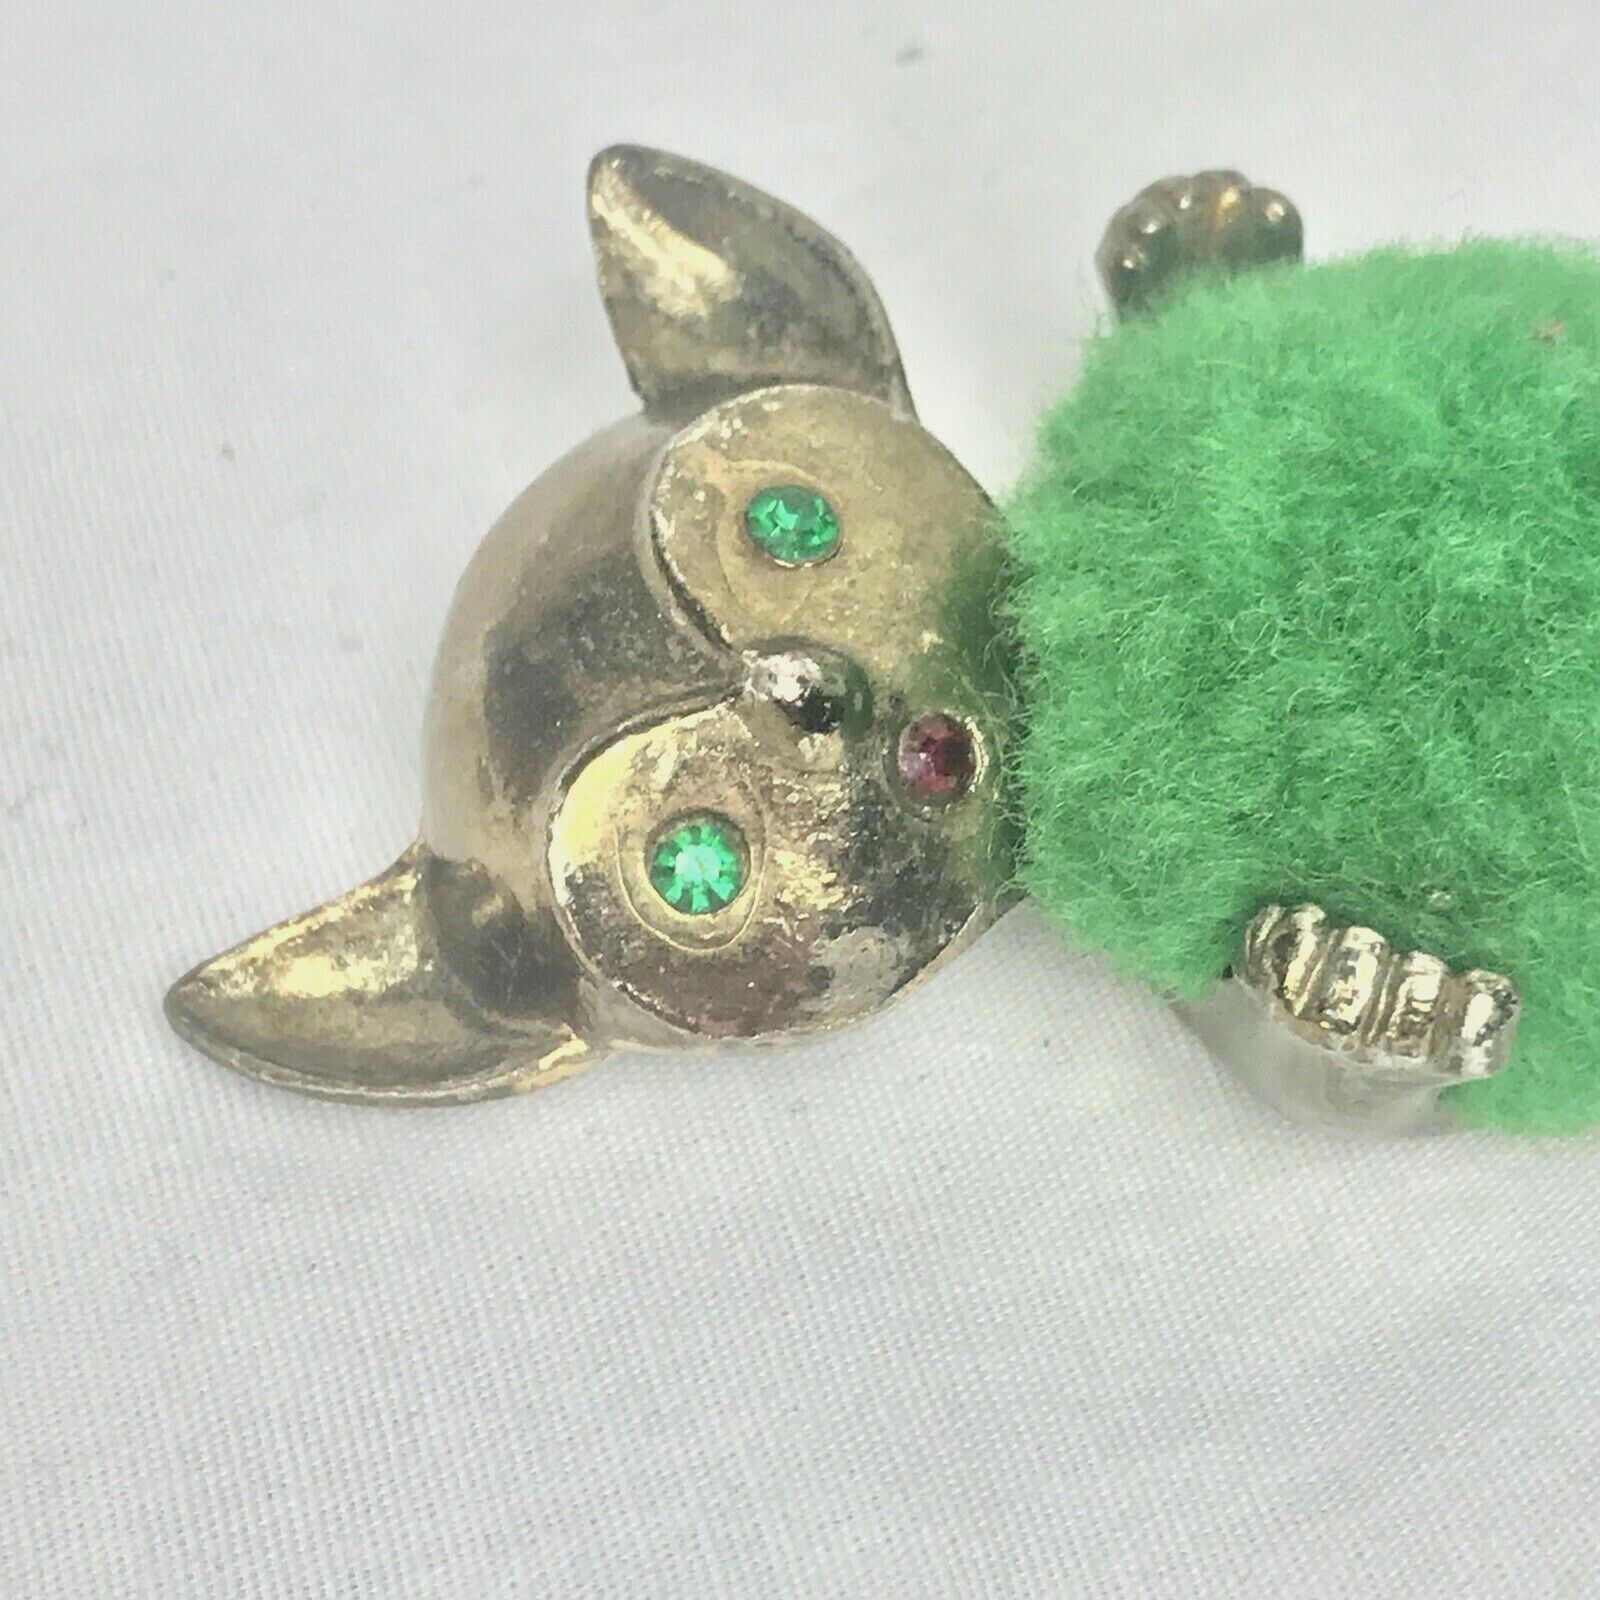 Mouse Pincushion Jeweled Green Eyes Antique Original Vintage Sewing Pin Cushion